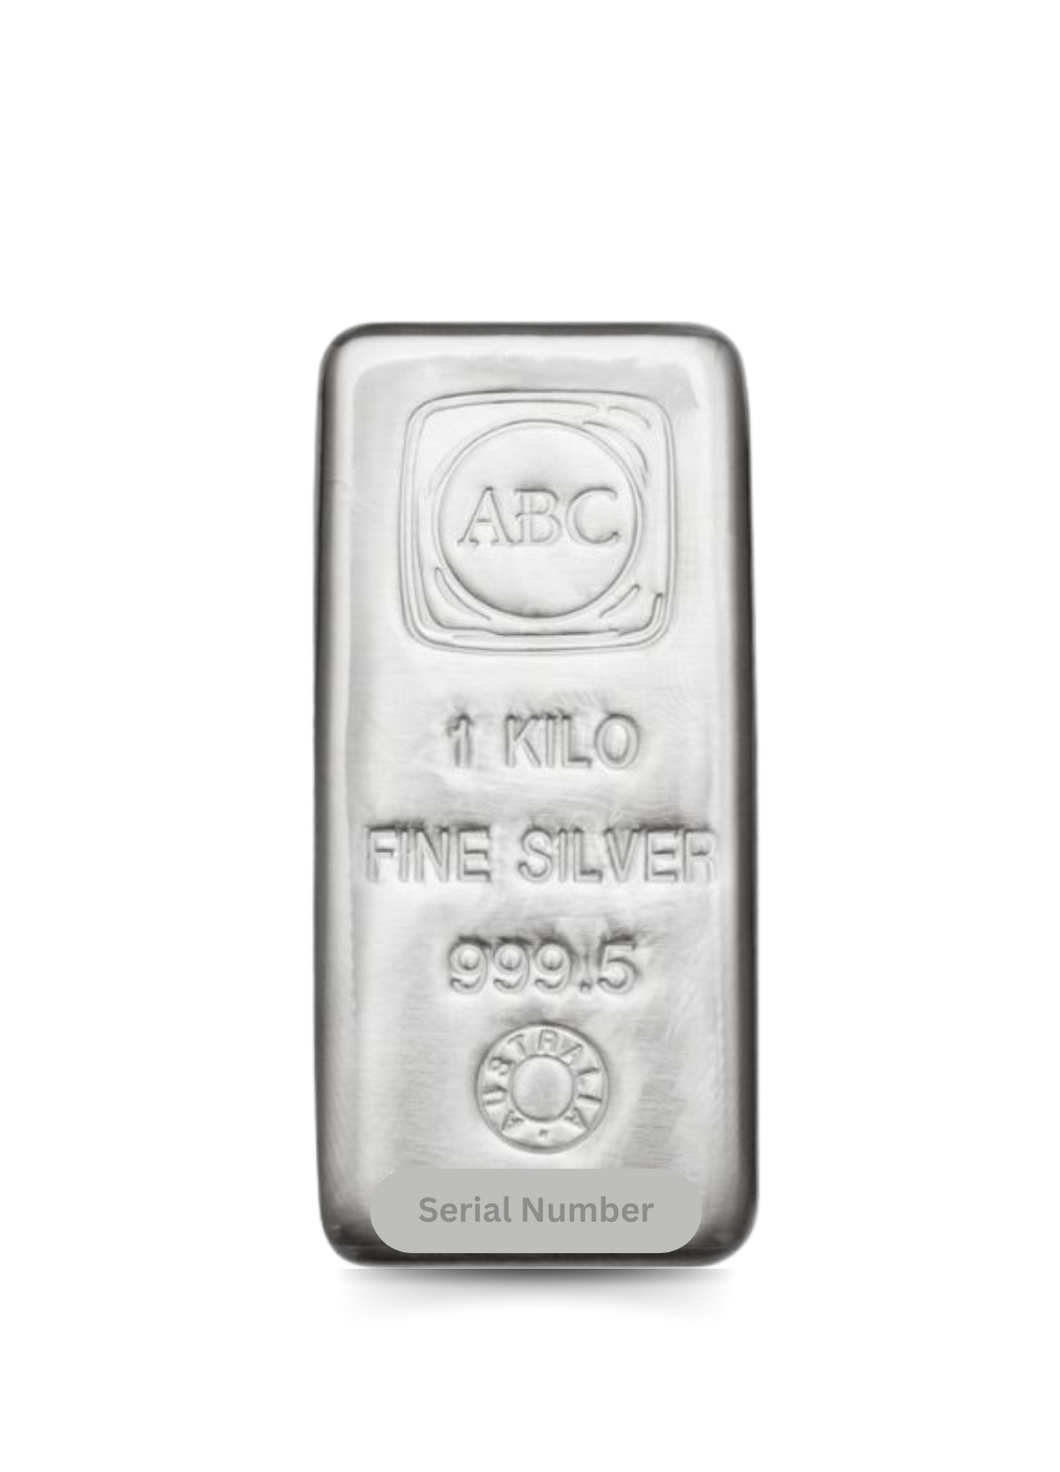 1 Kilo Australian Bullion Company Silver Bar